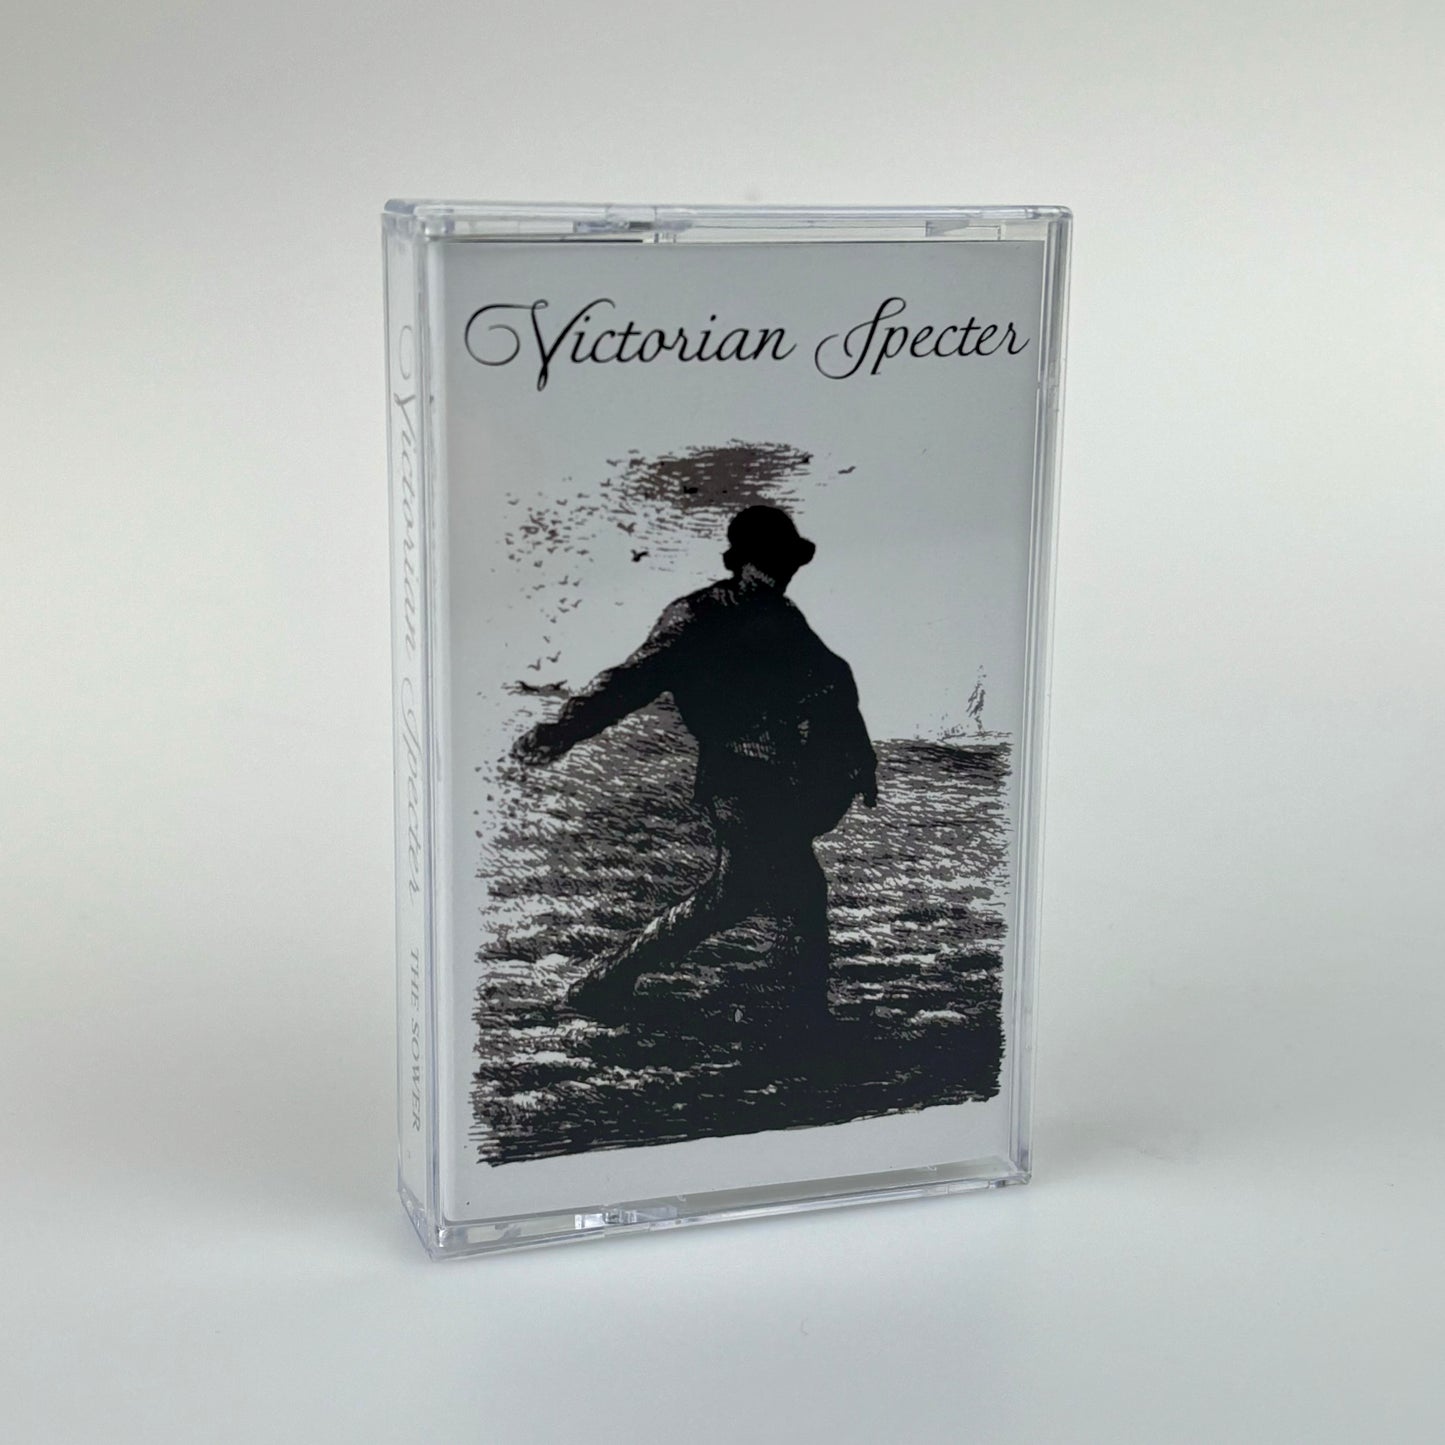 VICTORIAN SPECTER - The Sower cassette